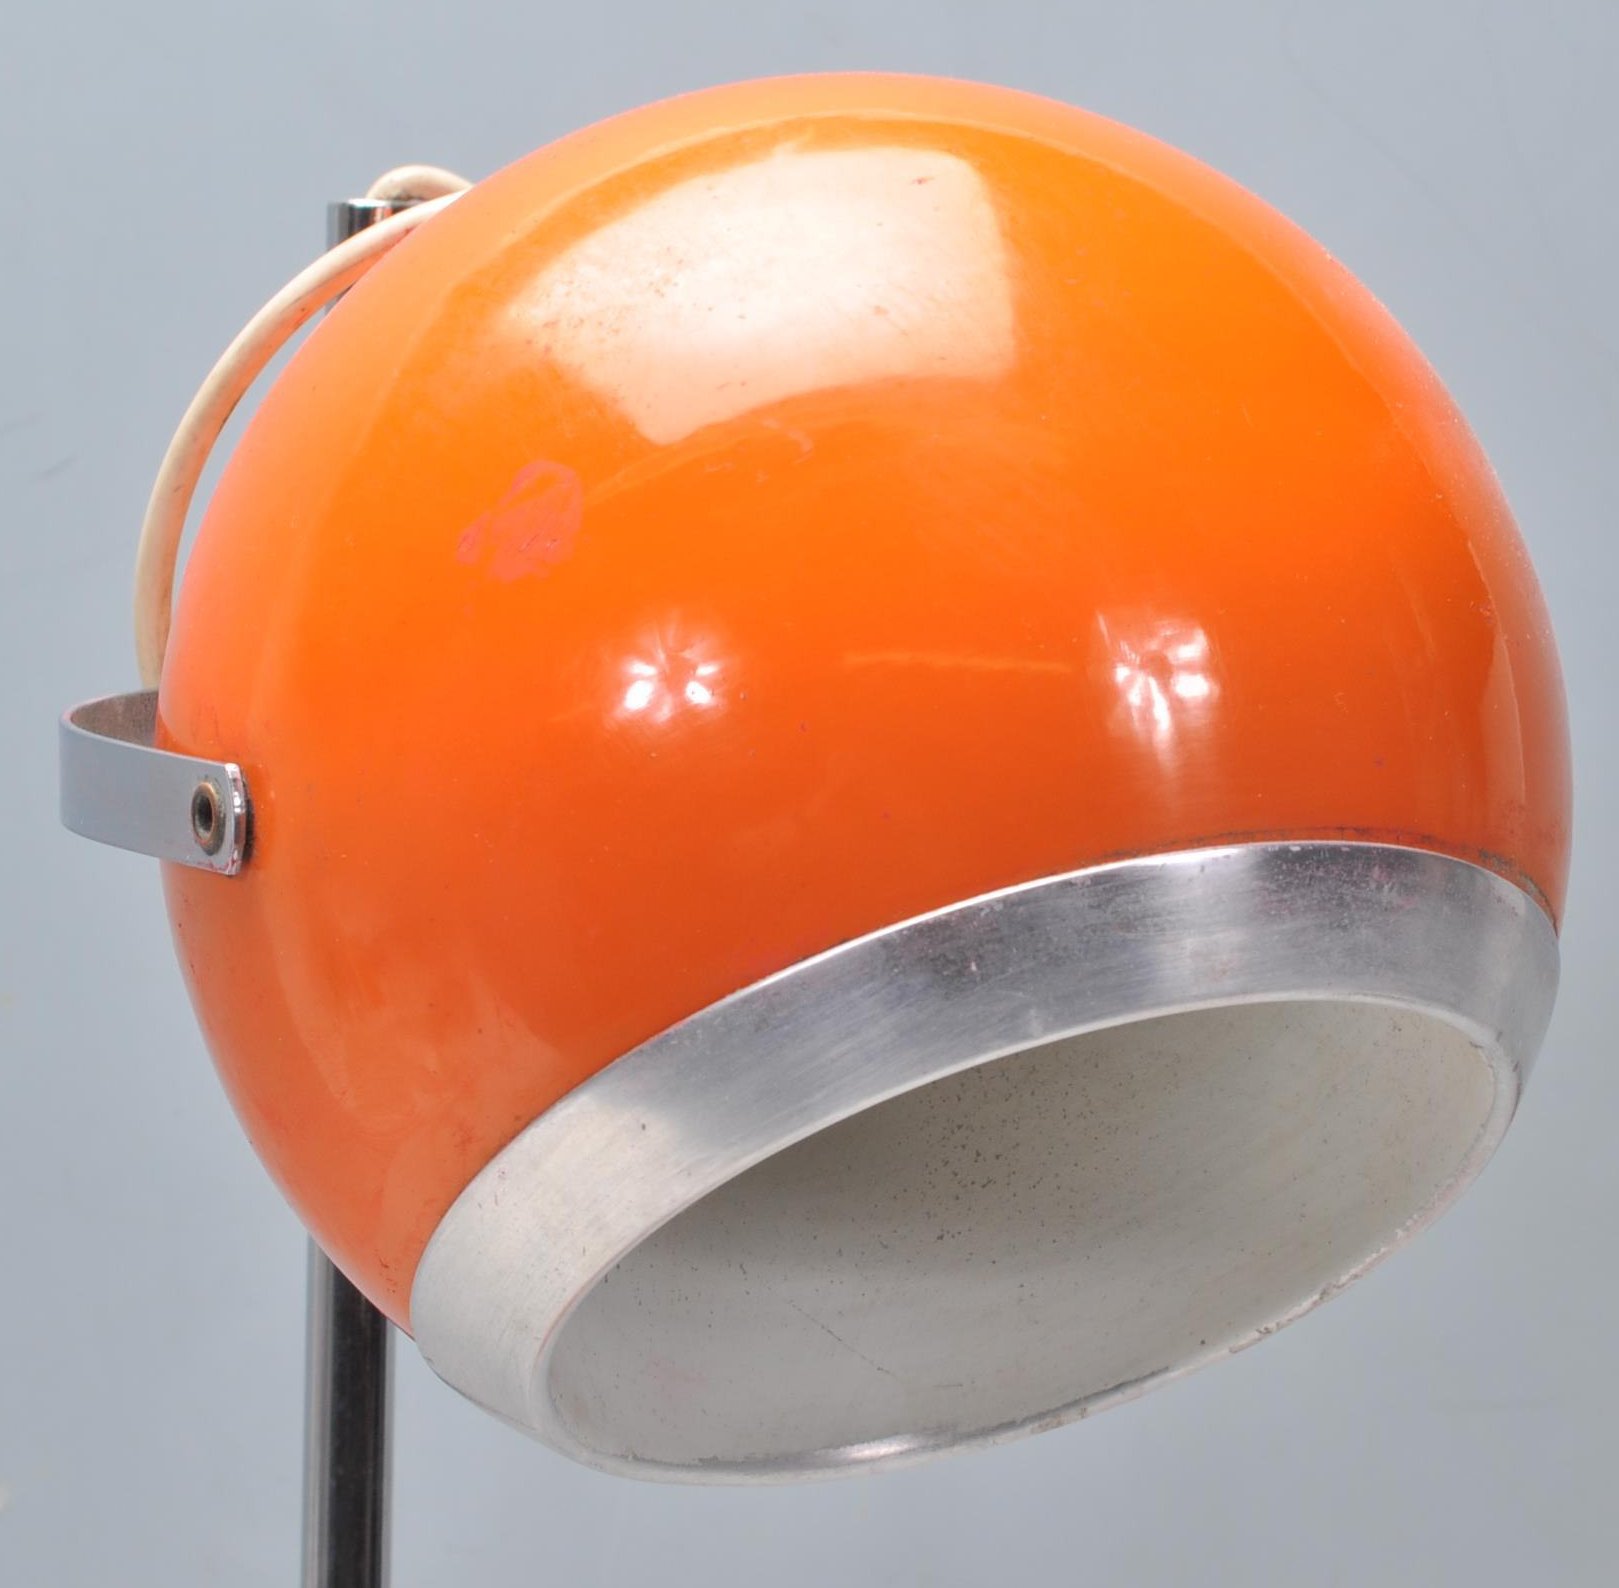 1970S RETRO VINTAGE VIBRANT ORANGE BALL DESK LAMP - Image 2 of 7